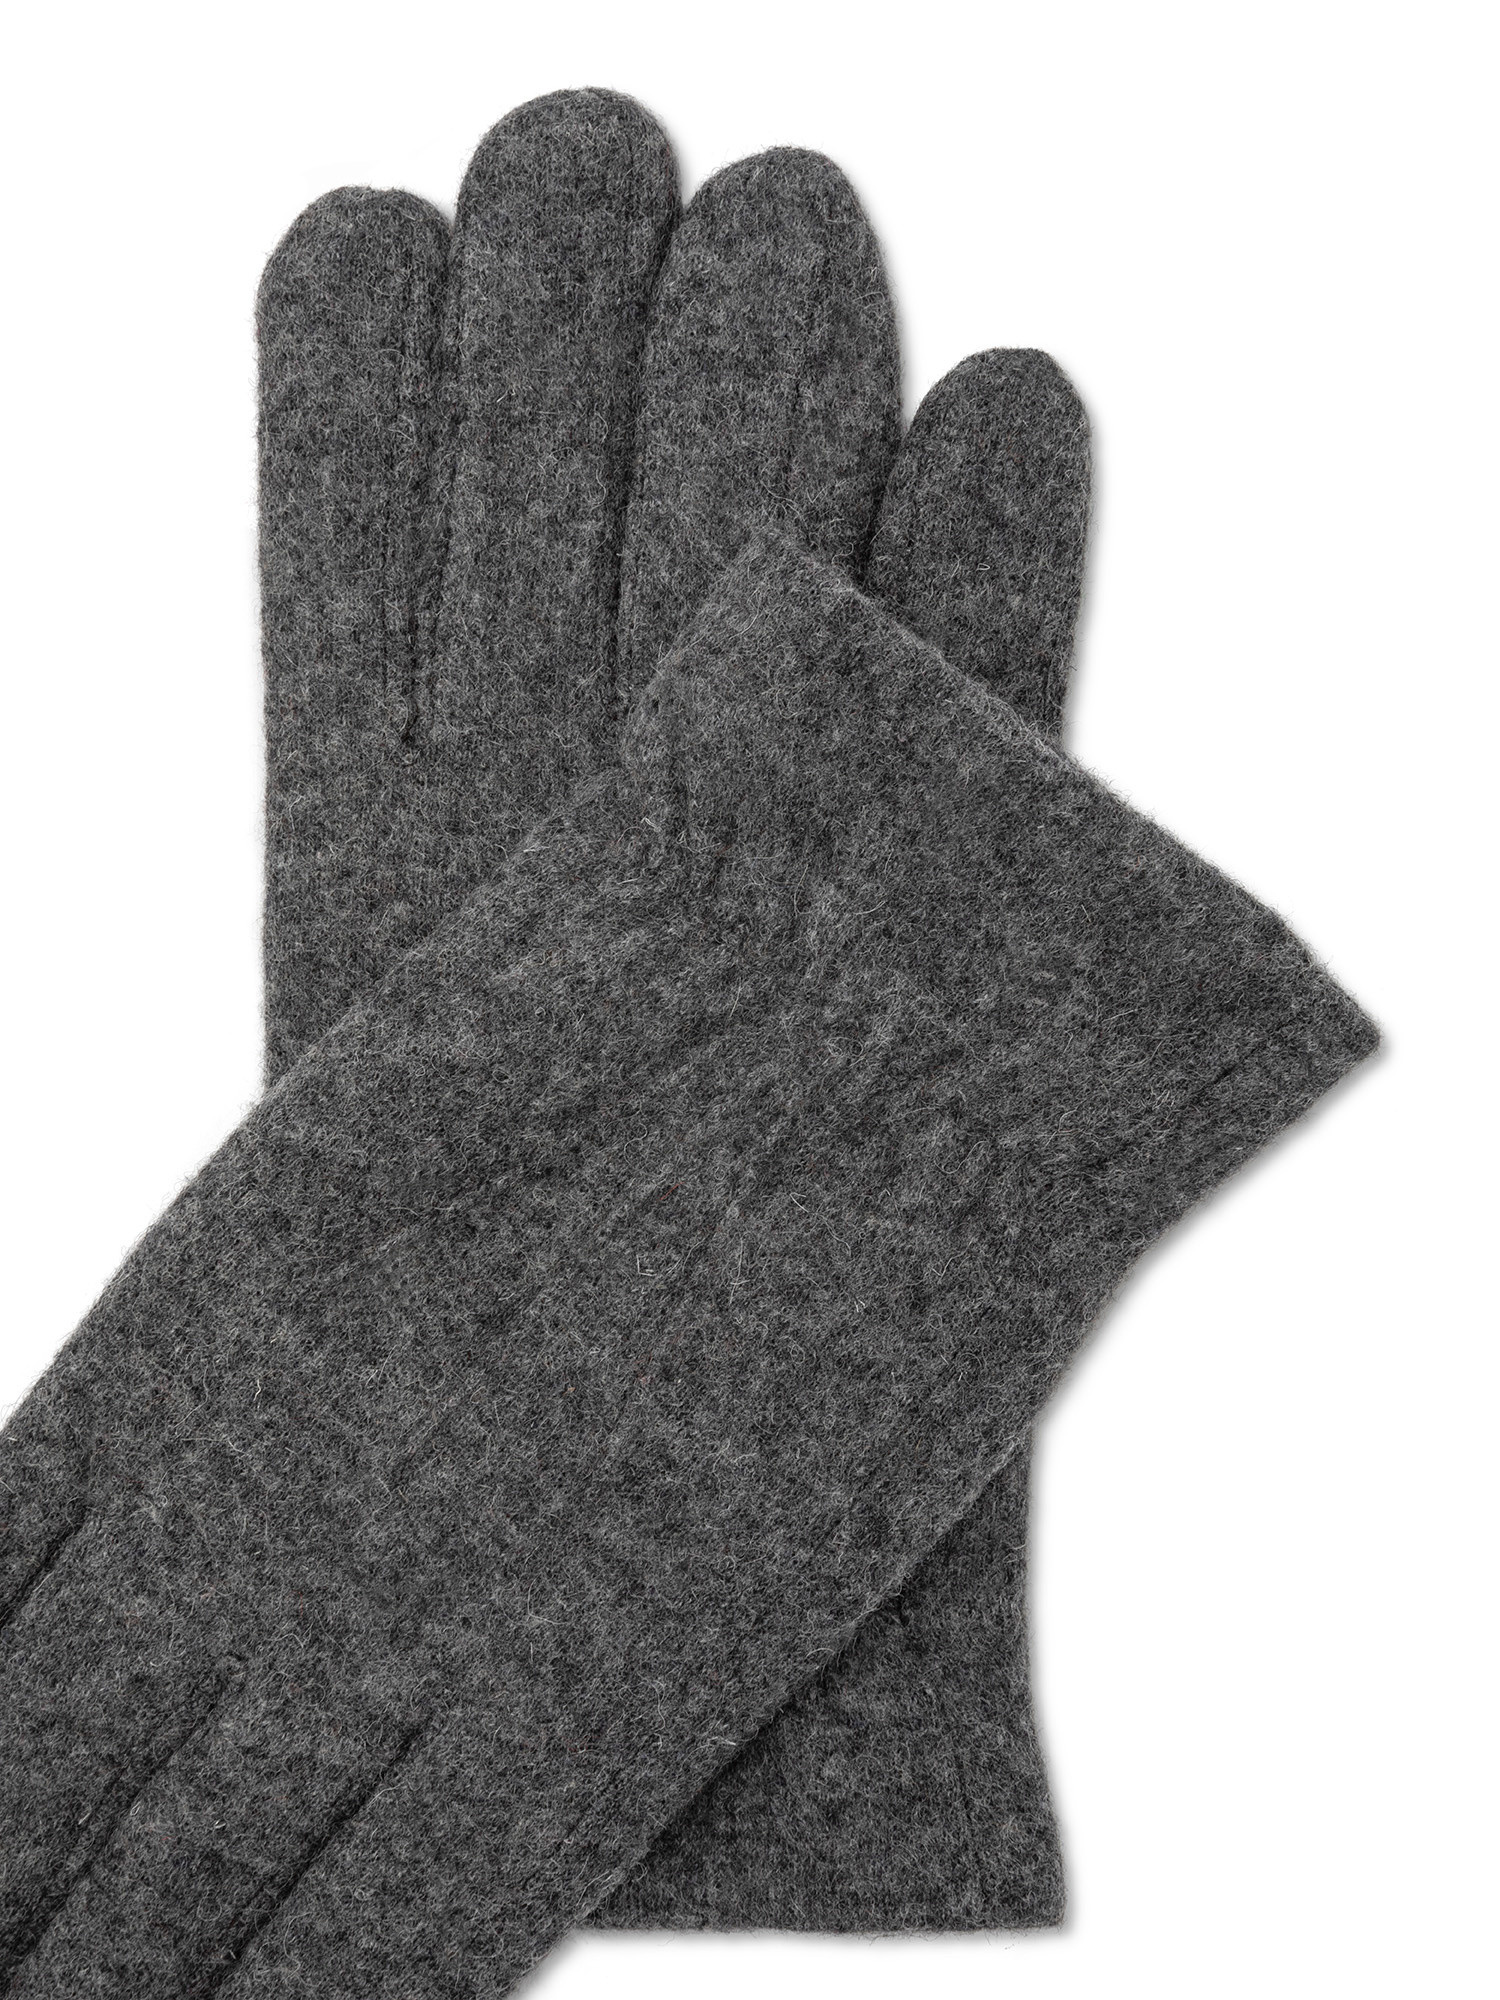 Luca D'Altieri - Wool blend cloth gloves, Grey, large image number 1